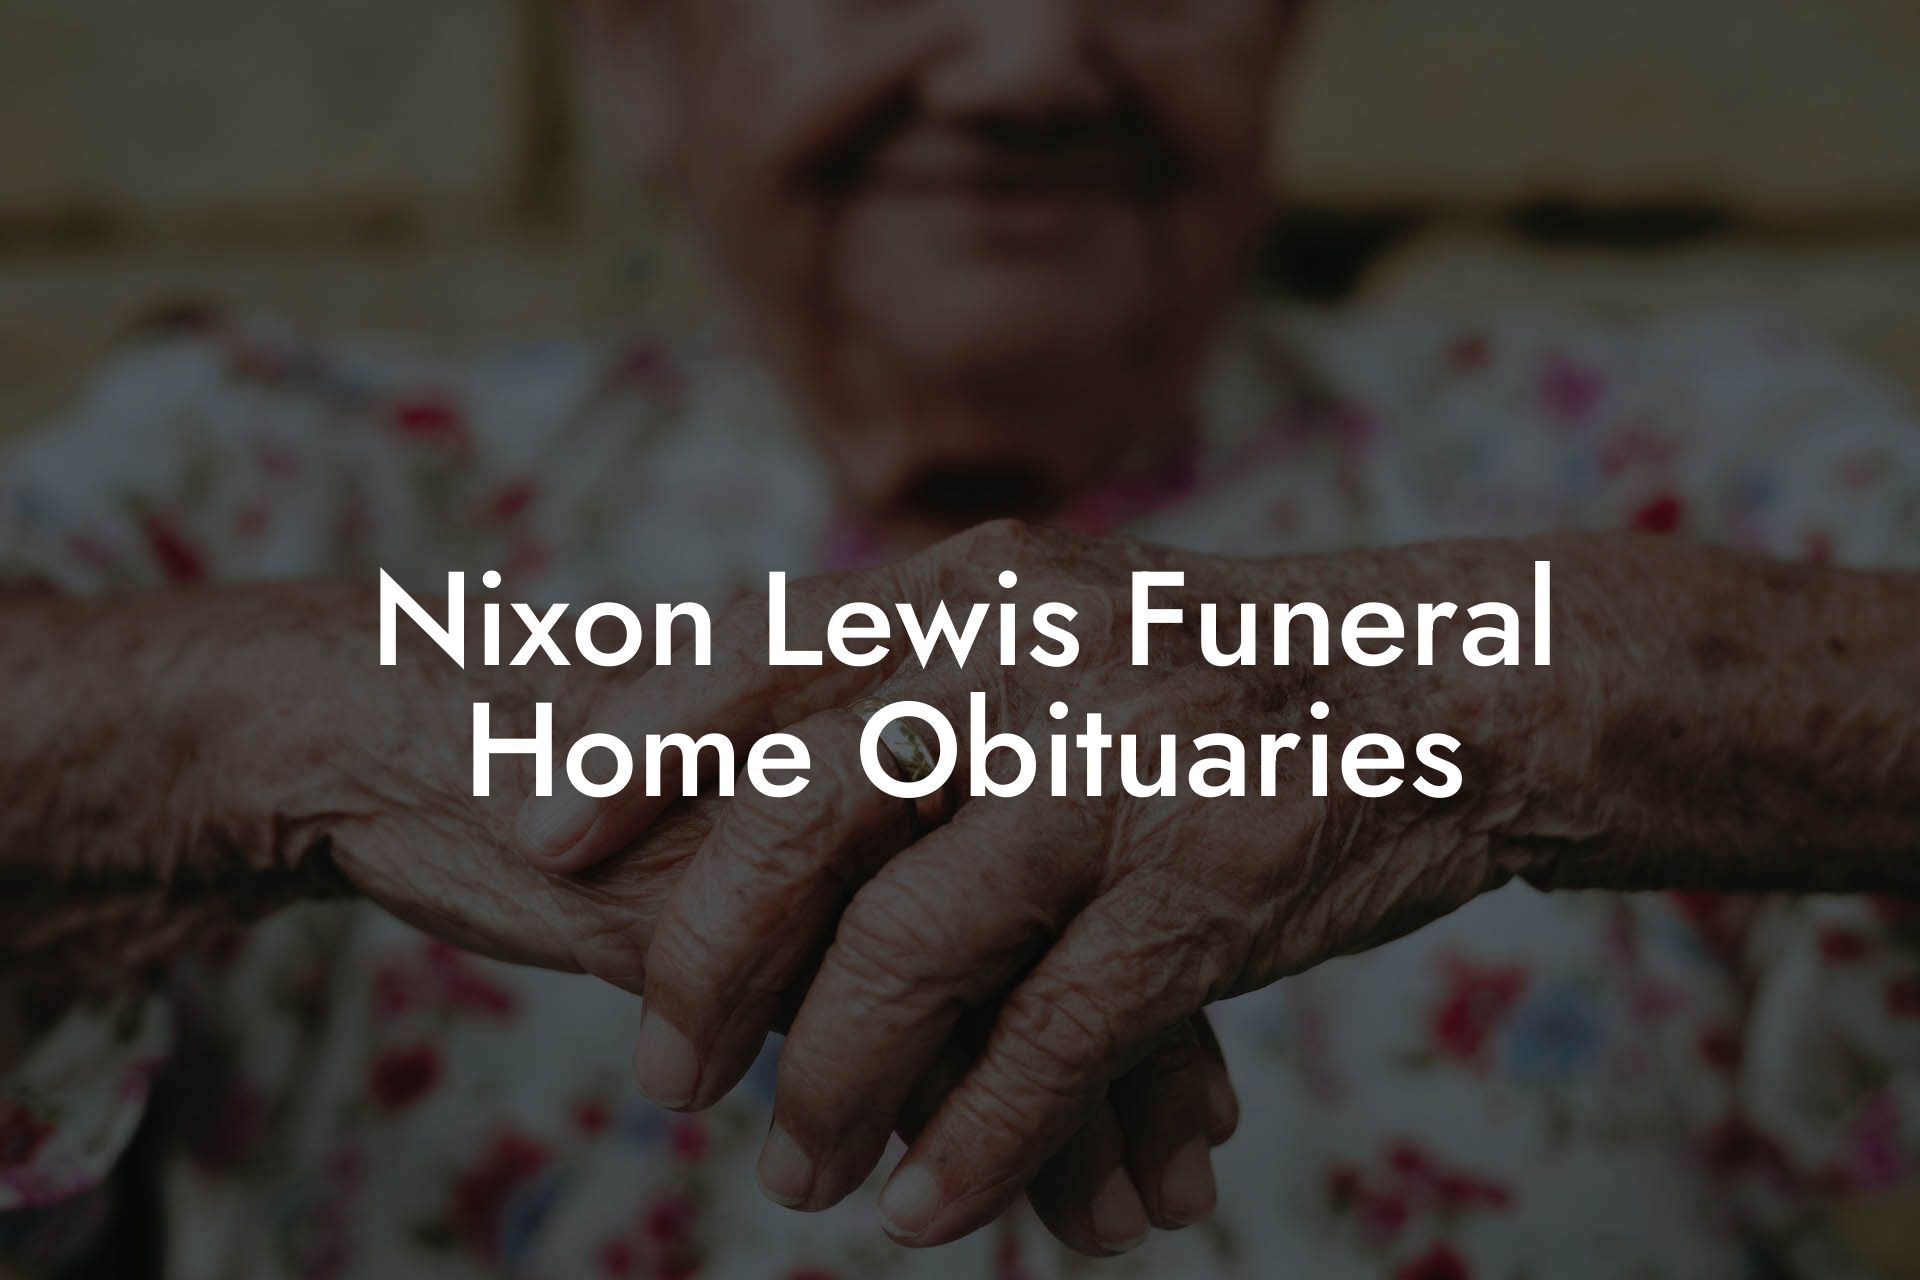 Nixon Lewis Funeral Home Obituaries